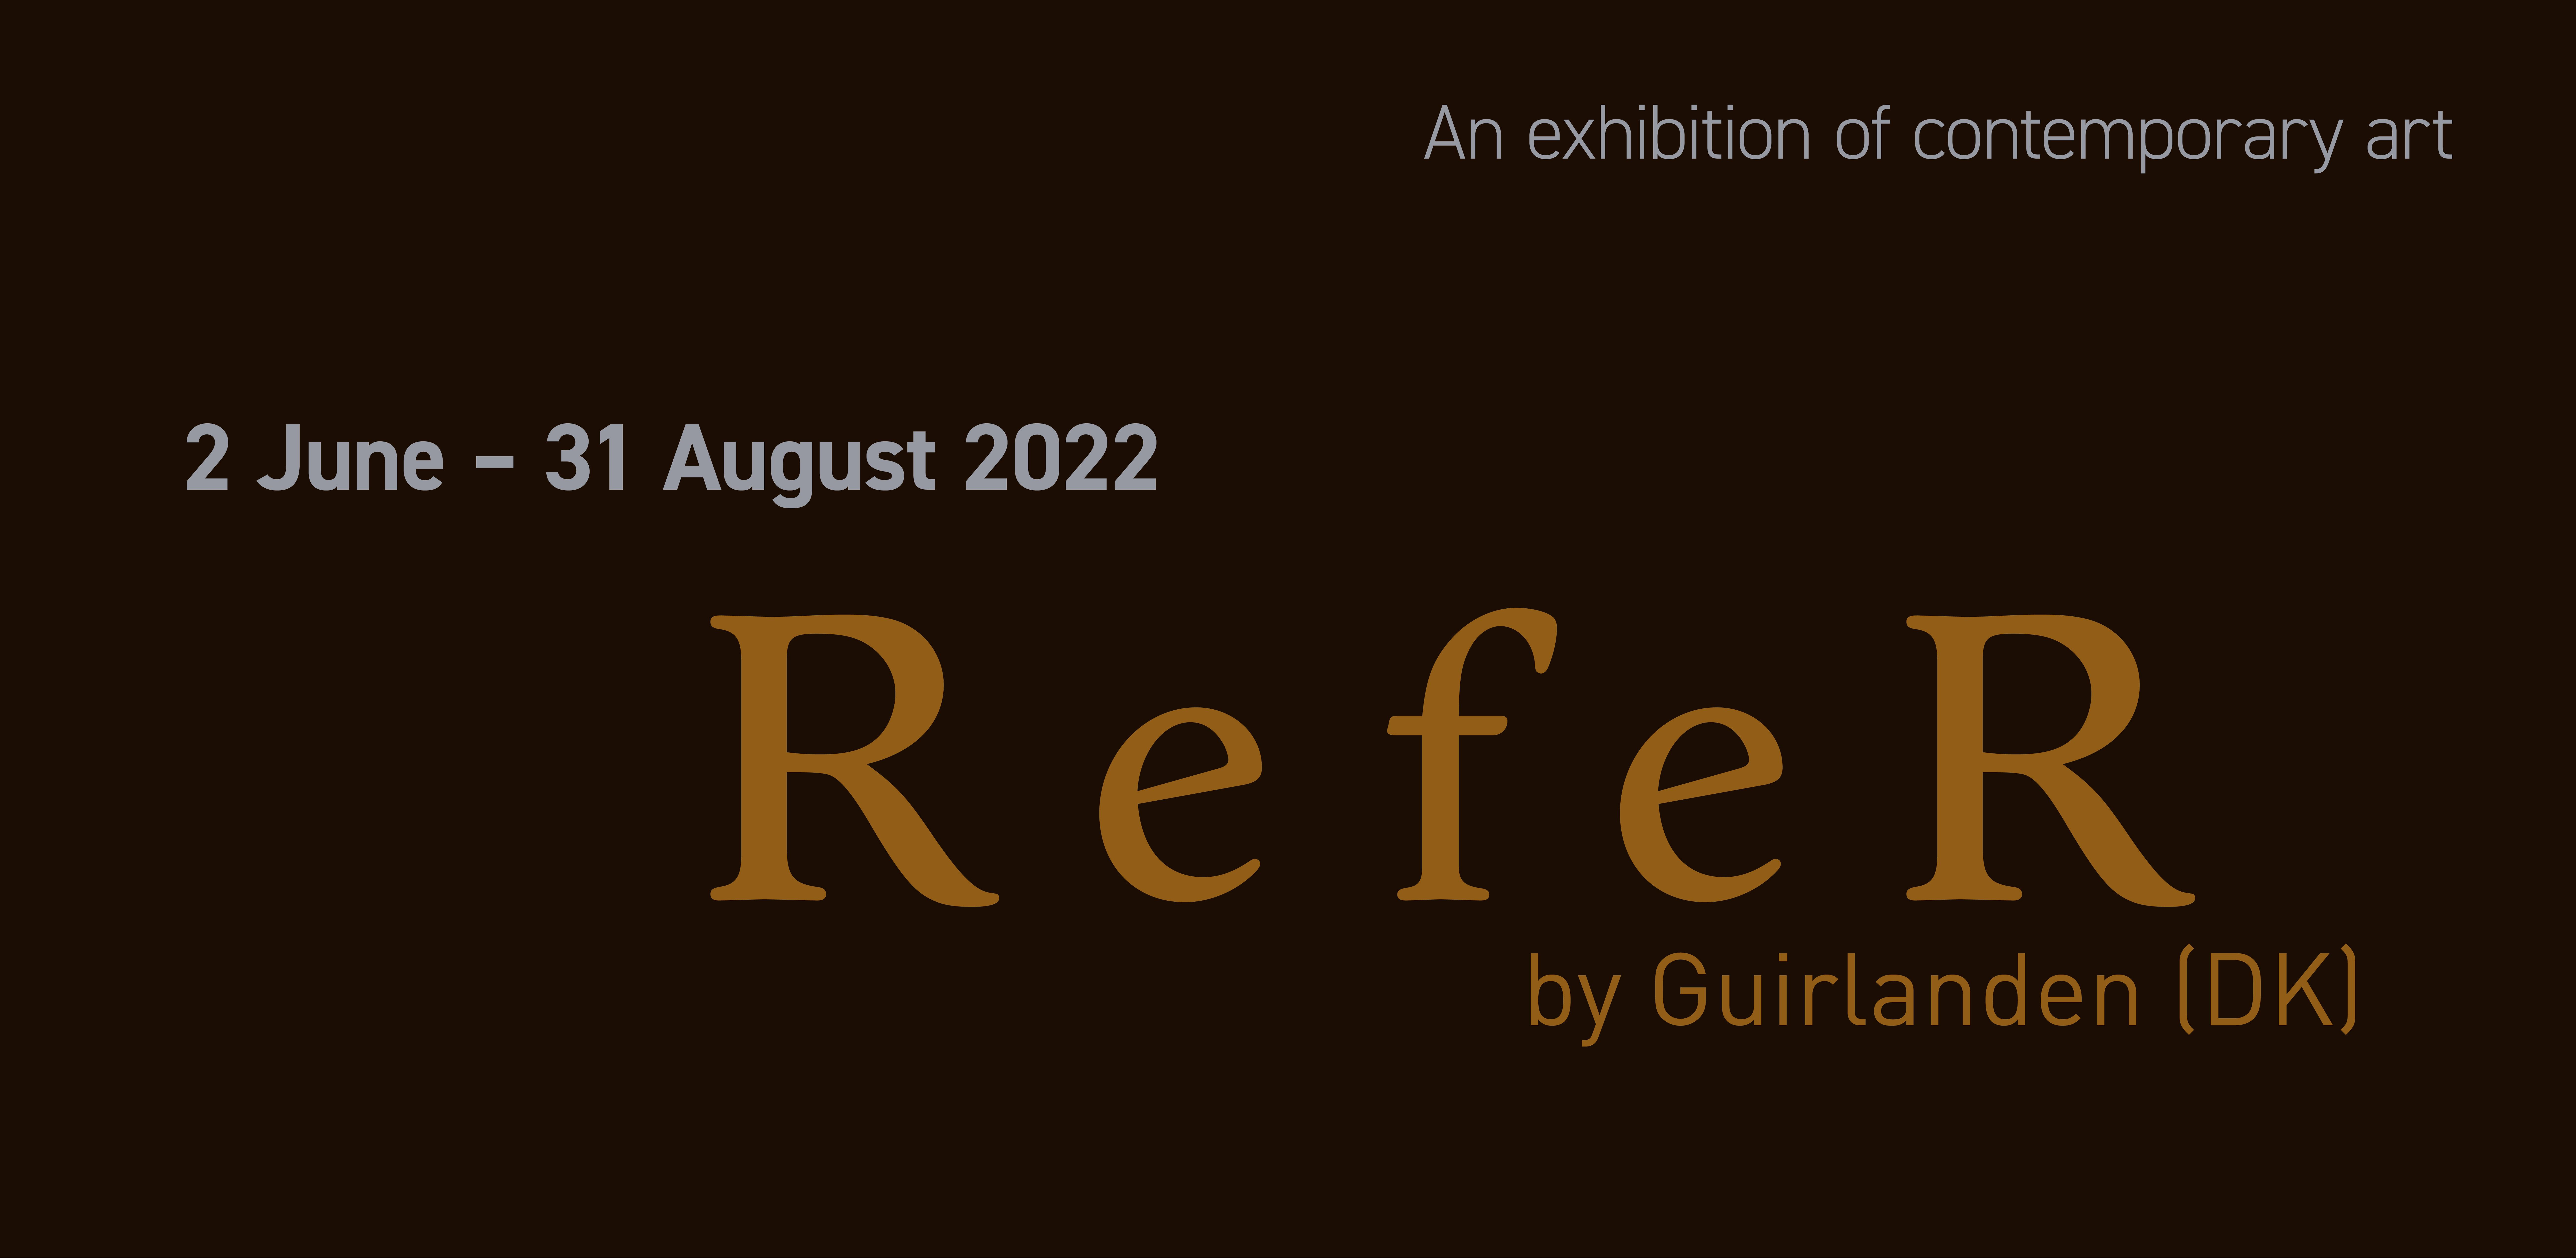 ReFer, by Guirlanden. 2 June - 31 August 2022